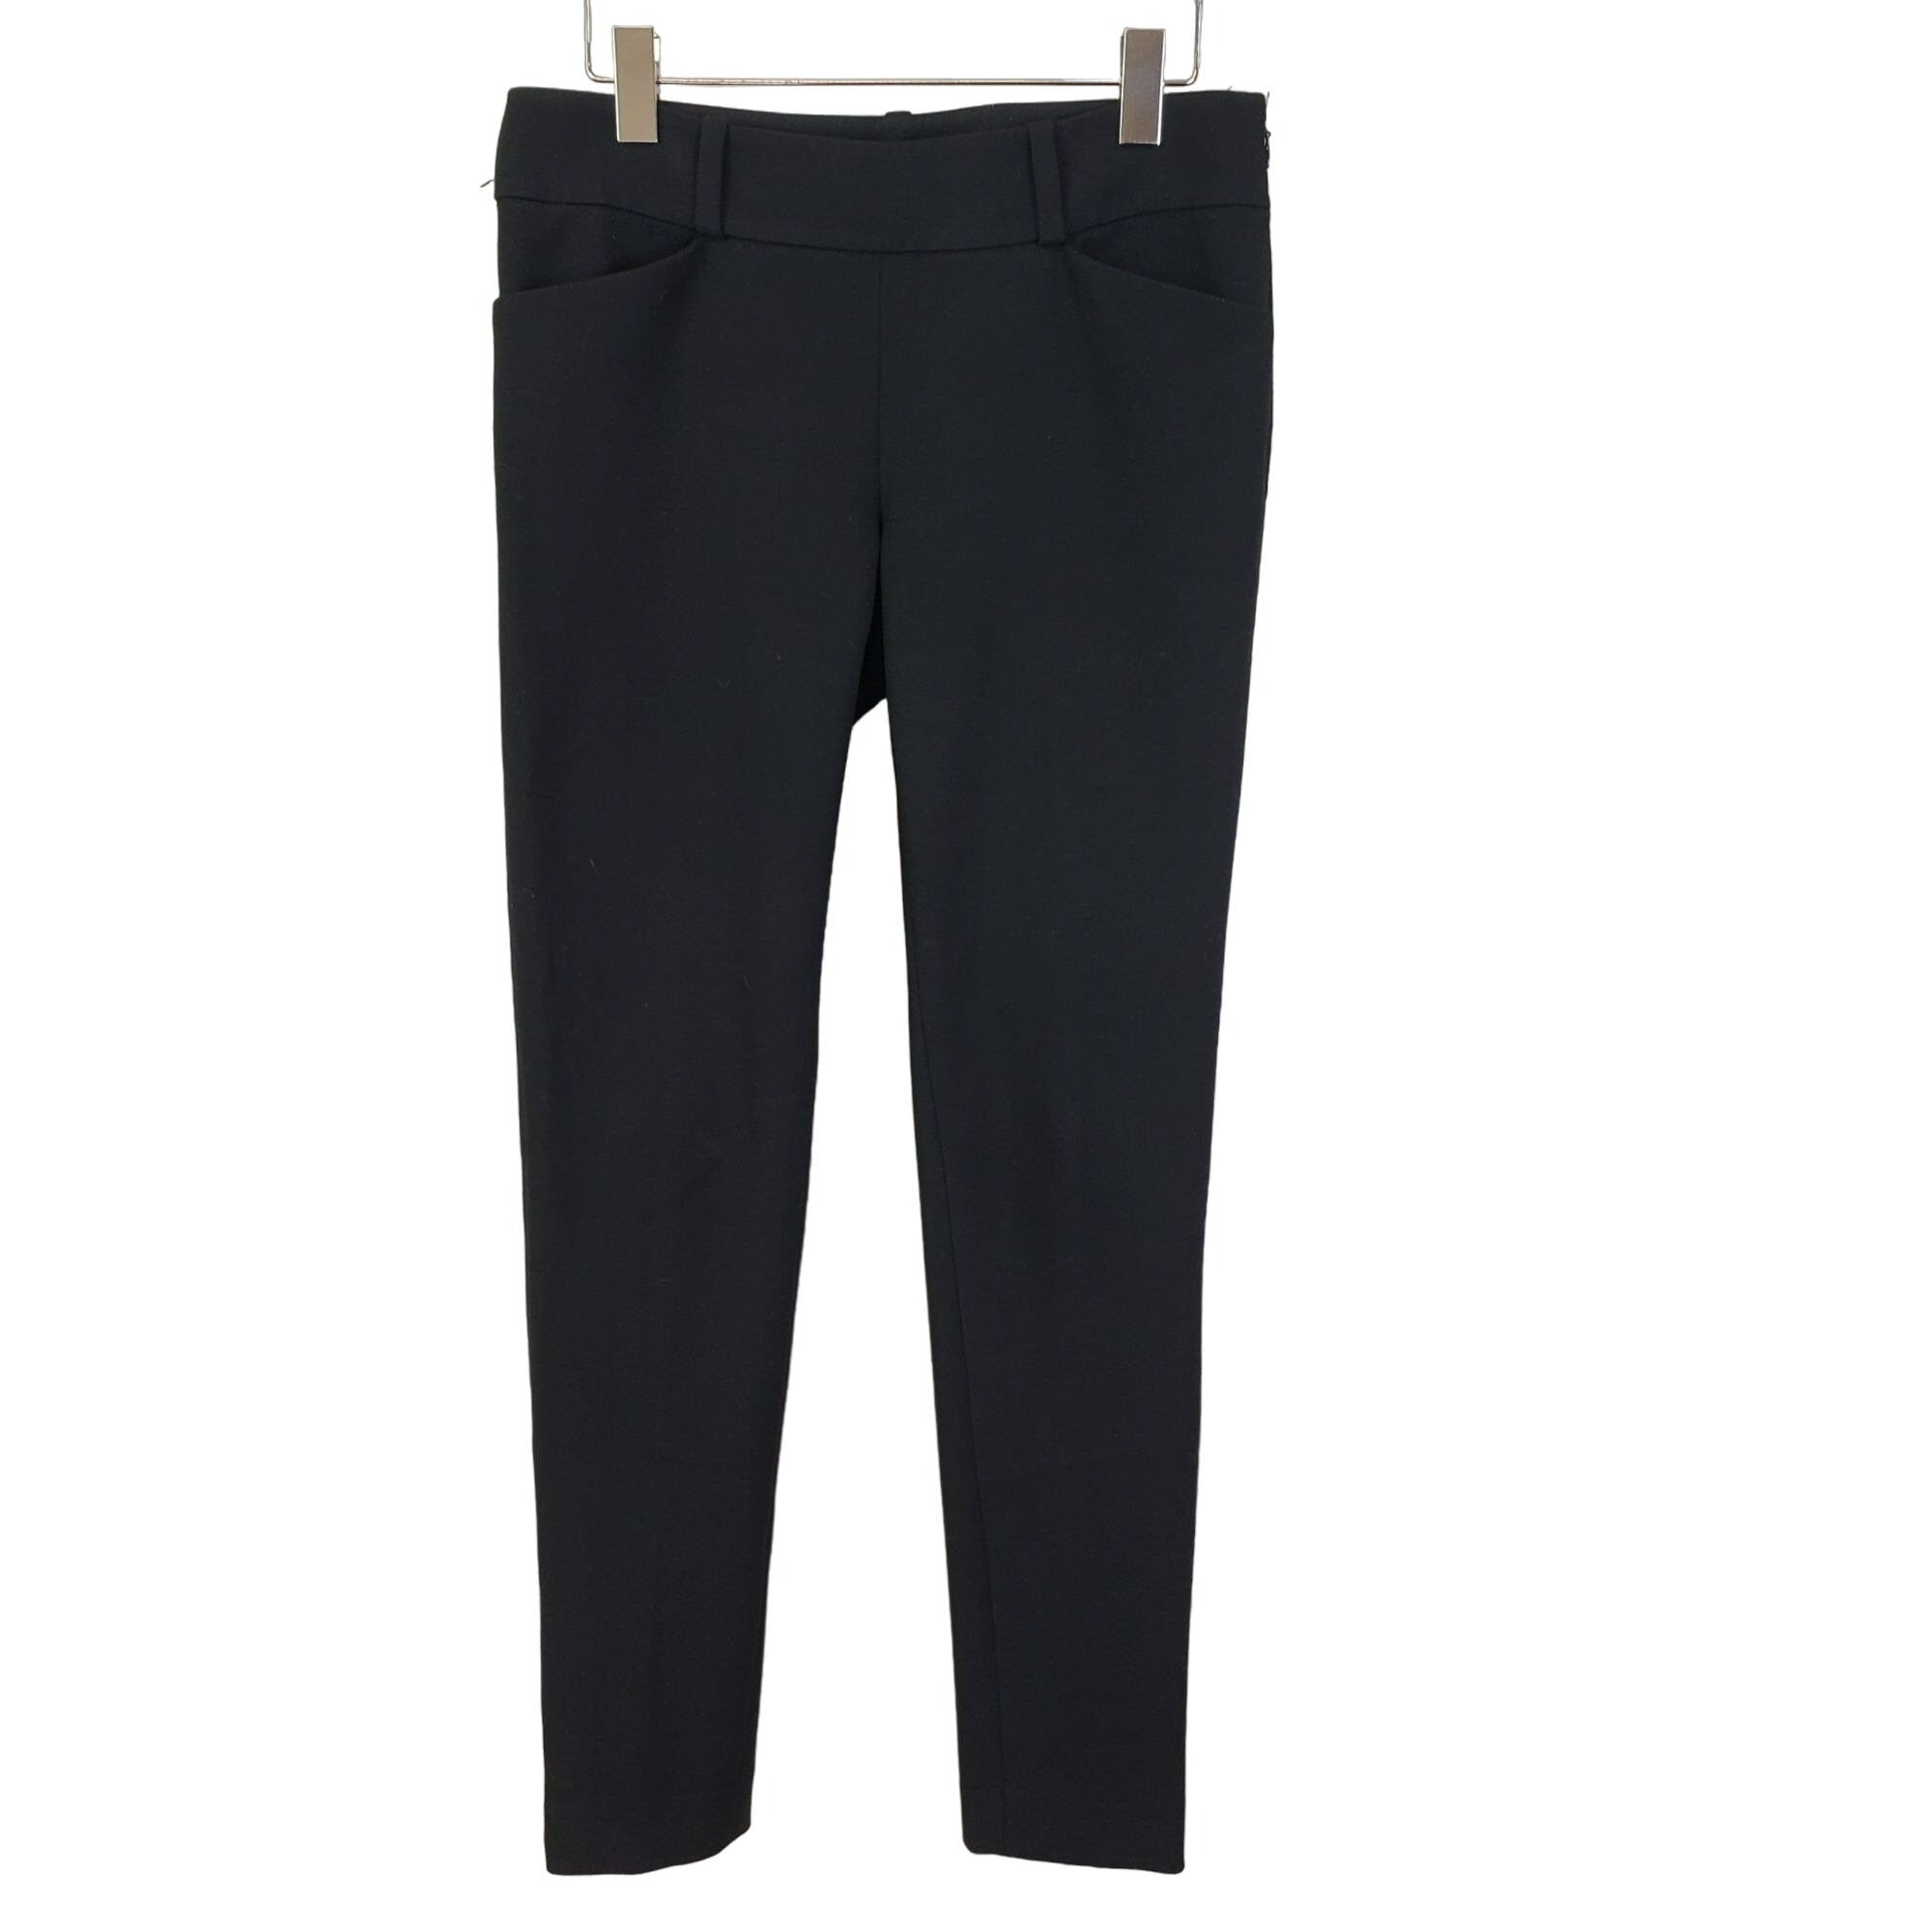 ANN TAYLOR LOFT Trouser Pants Womens Size 8 Marisa Gray Wide Leg Flat Front  $18.90 - PicClick